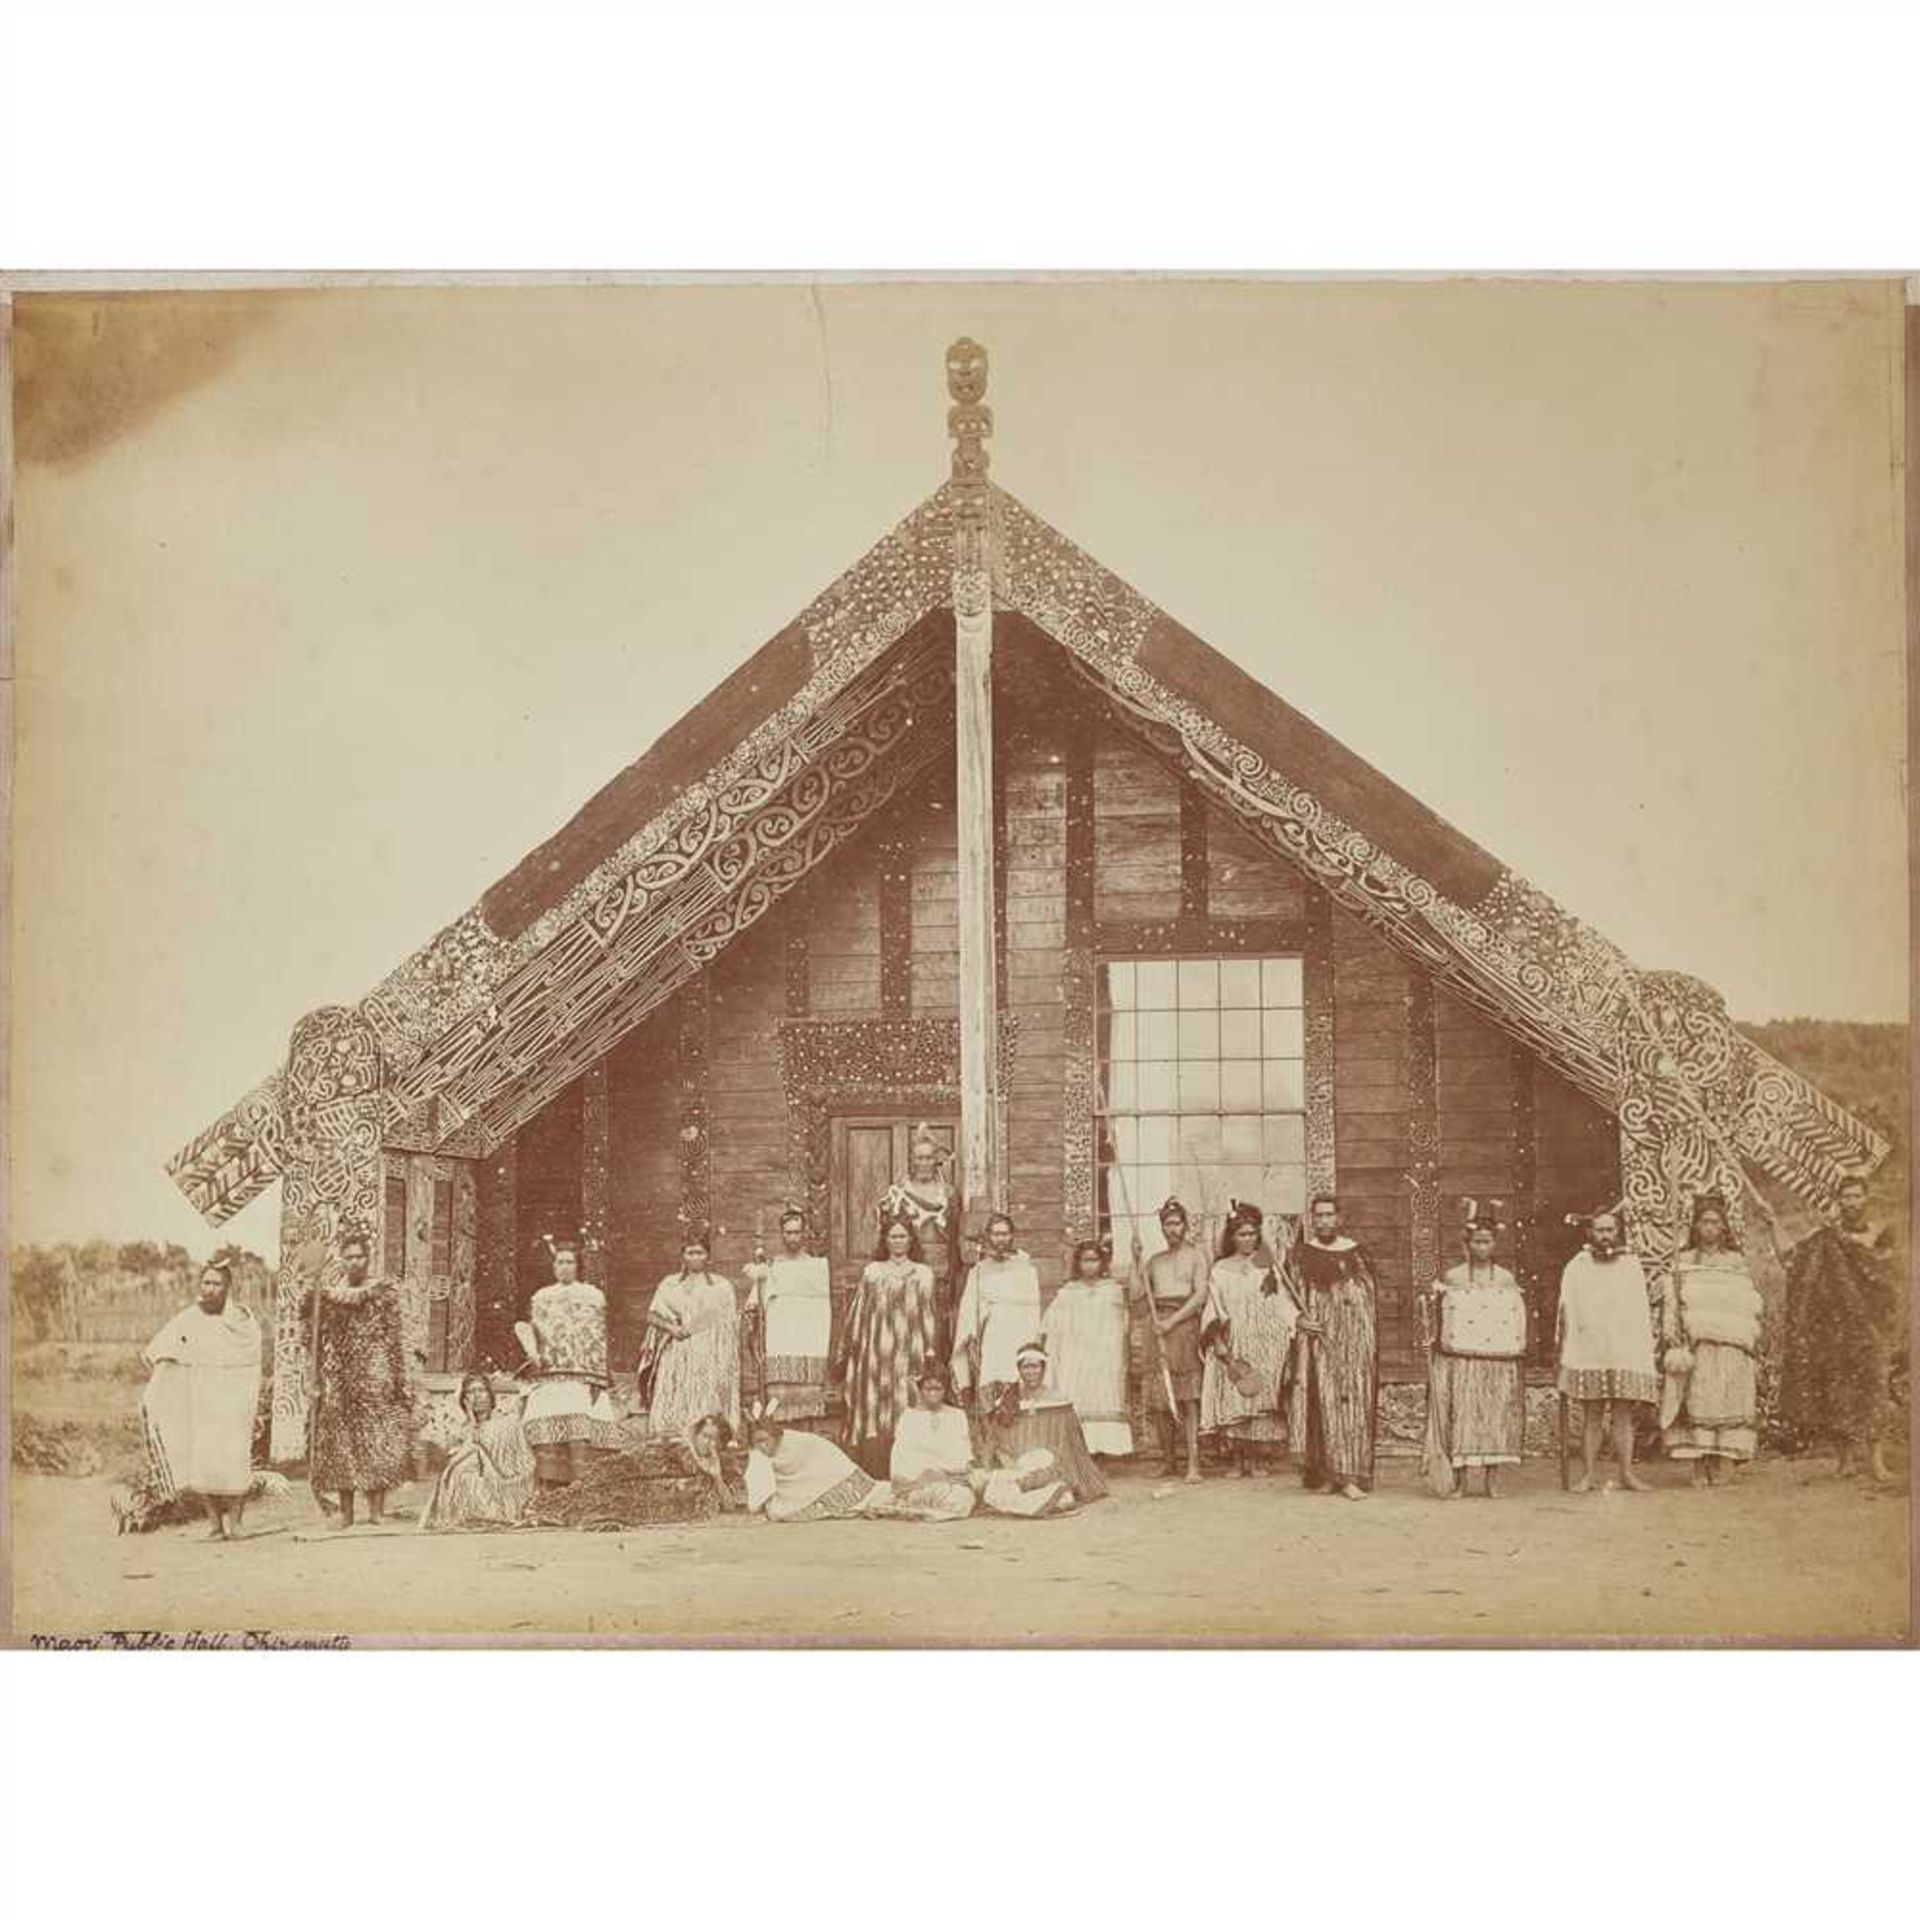 PHOTO ALBUM NEW ZEALAND, AUSTRALIA AND PENINSULAR MALAYSIA, 1882 a collection of albumen prints - Image 6 of 6